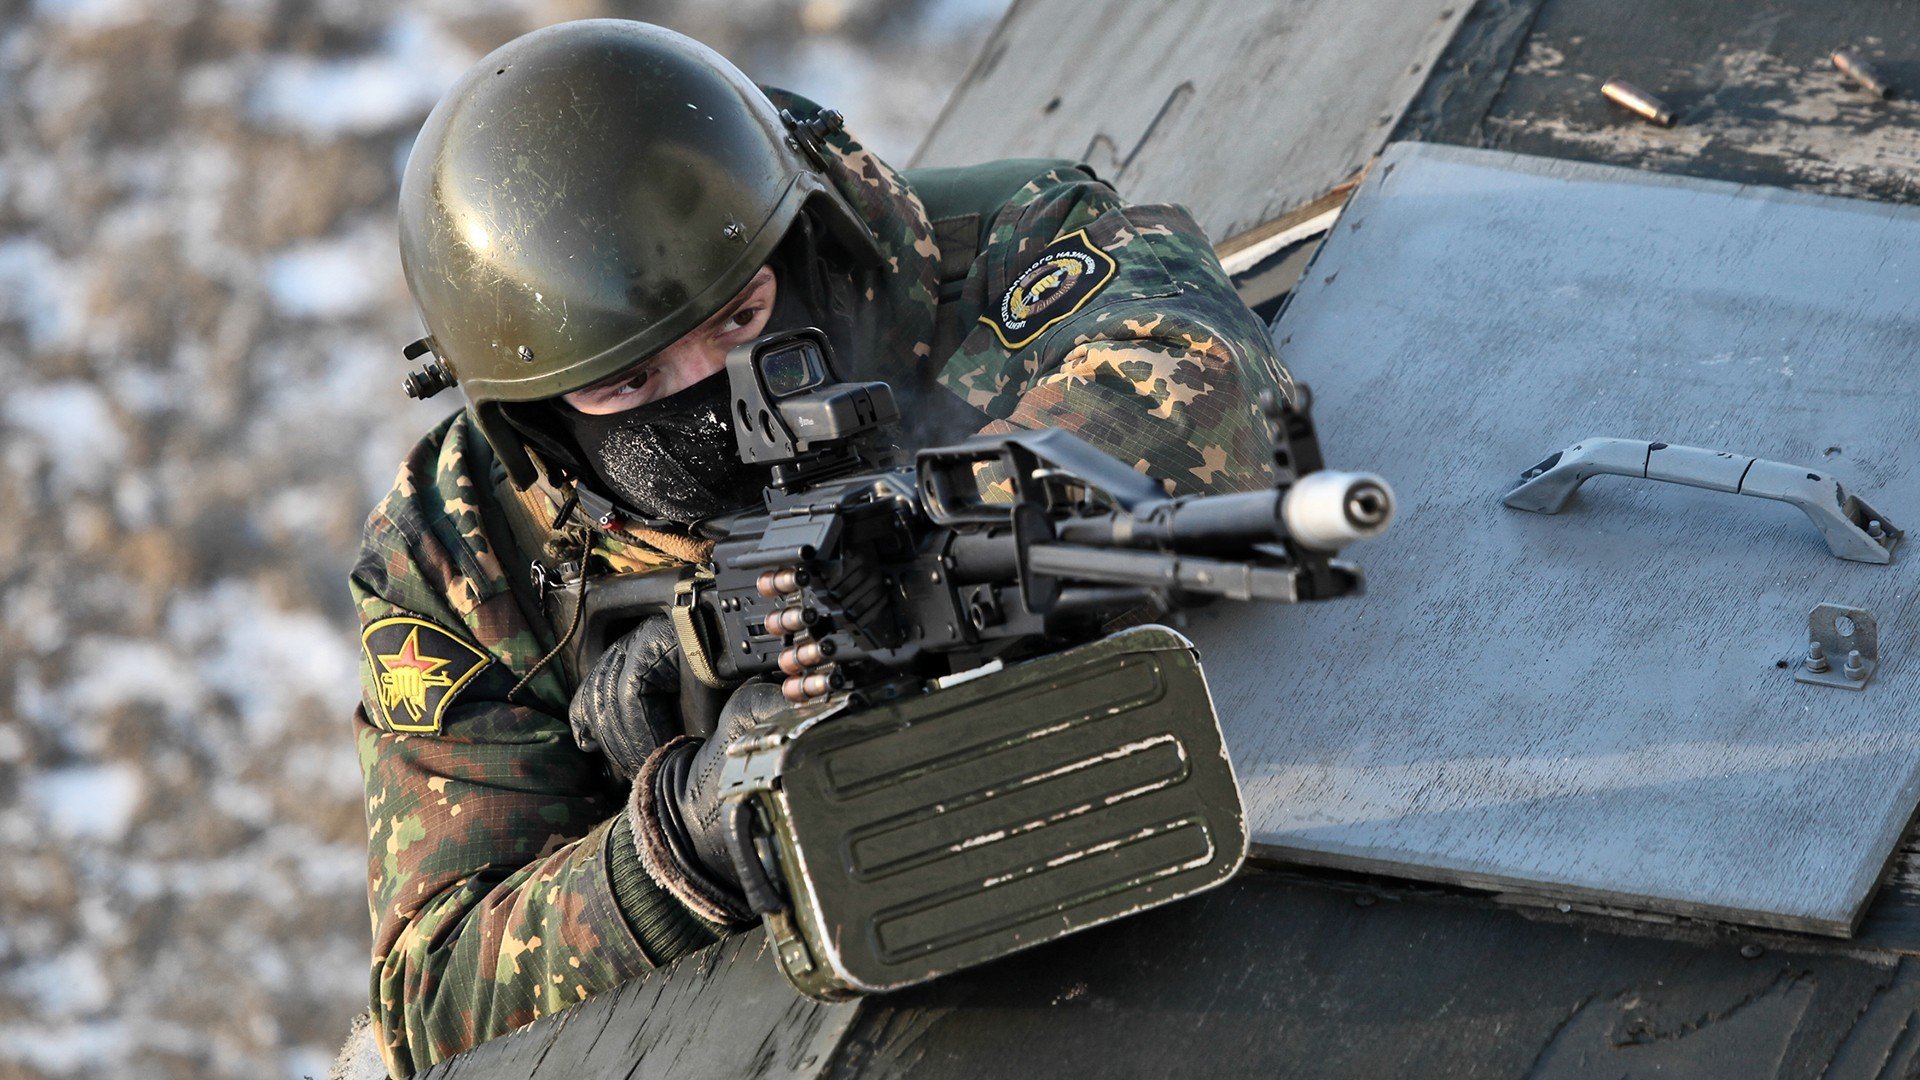 PKP Pecheneg Machine Guns Guns Weapons Spetsnaz Russian Army Soldiers